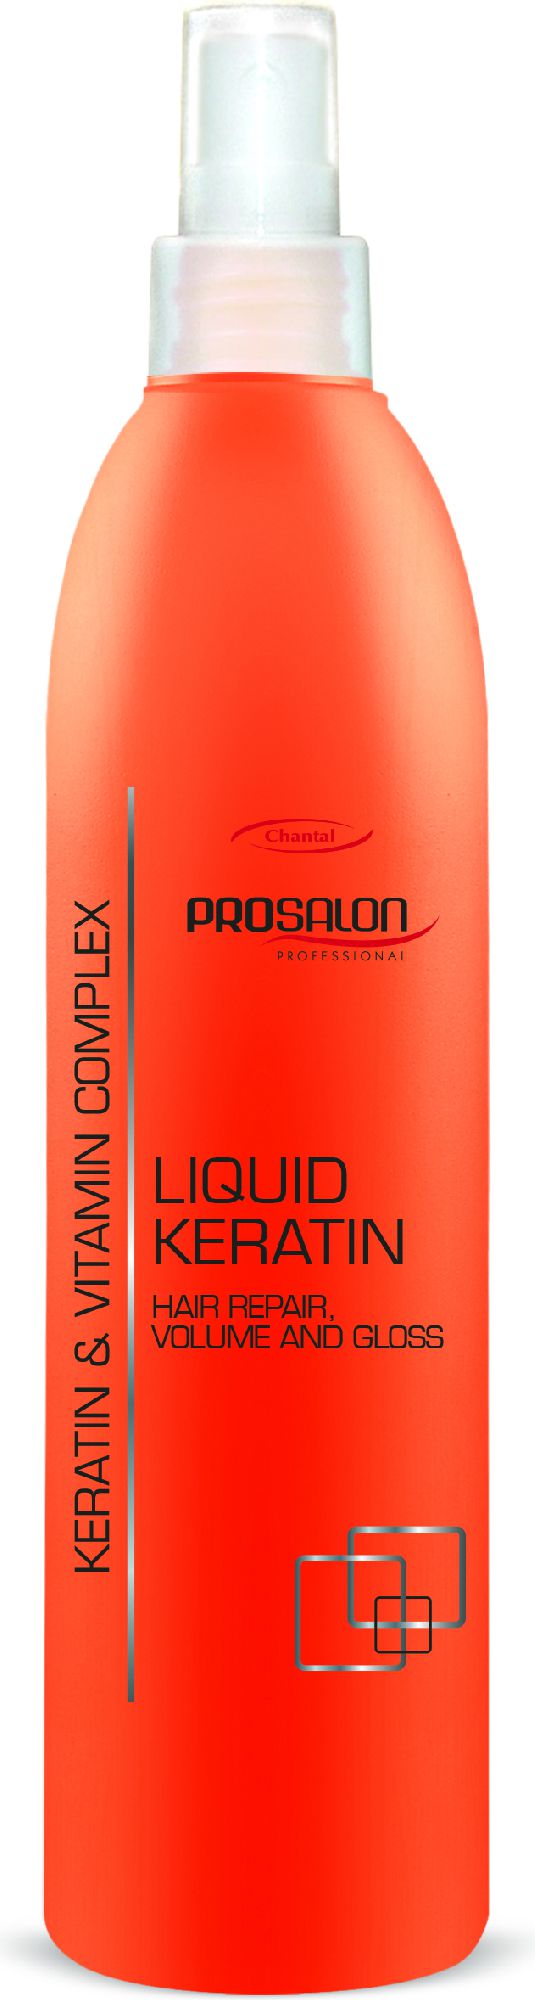 Chantal ProSalon Liquid keratin, Keratyna w plynie bez splukiwania 275 g 5900249043217 (5900249043217)